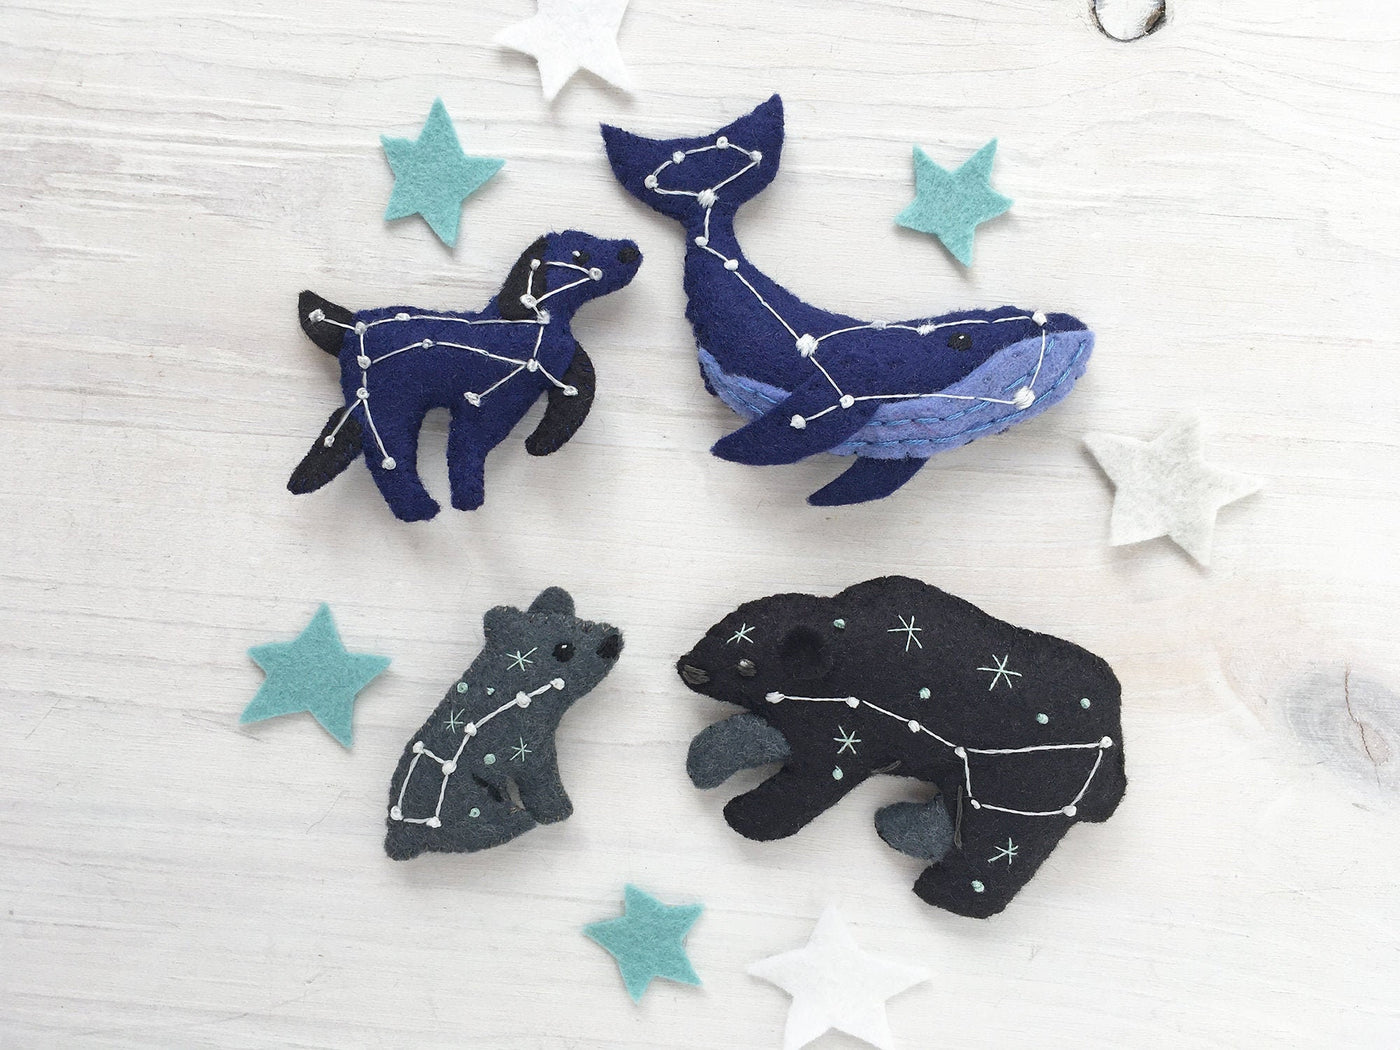 12 Constellation Zodiac Animals Sewing Patterns